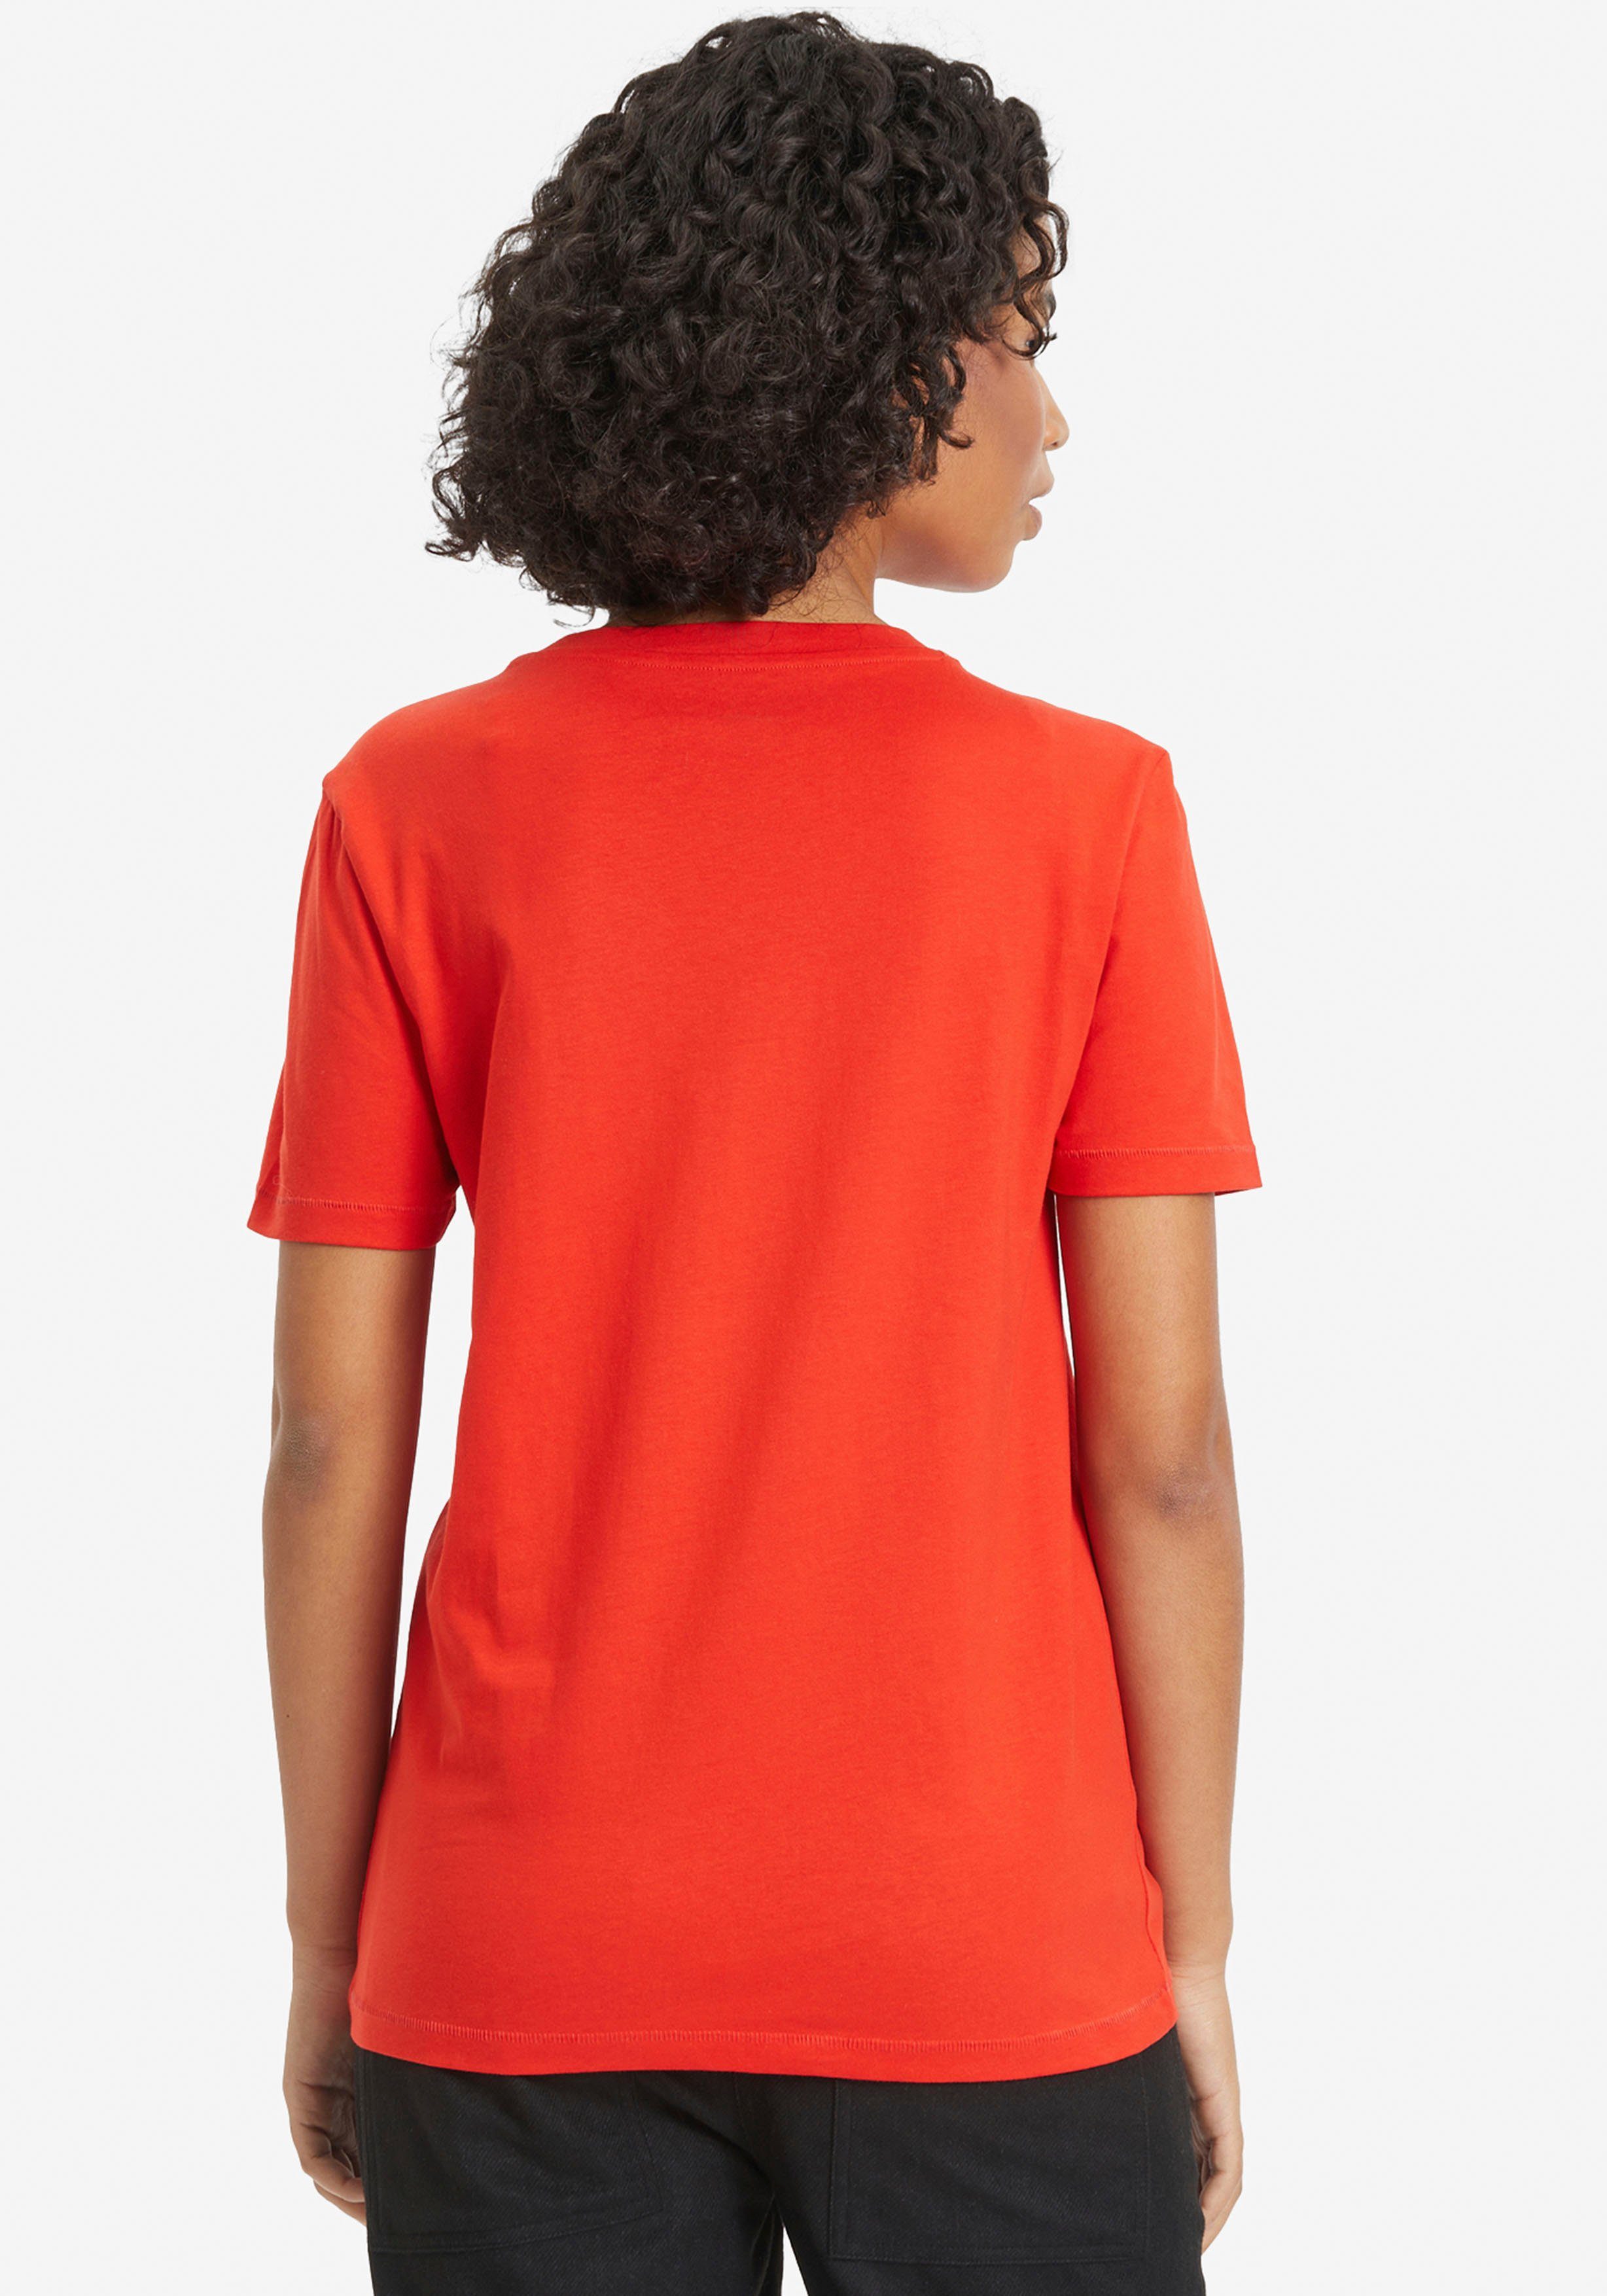 fiery NEUE - Rundhalsausschnitt KOLLEKTION red Tamaris T-Shirt mit